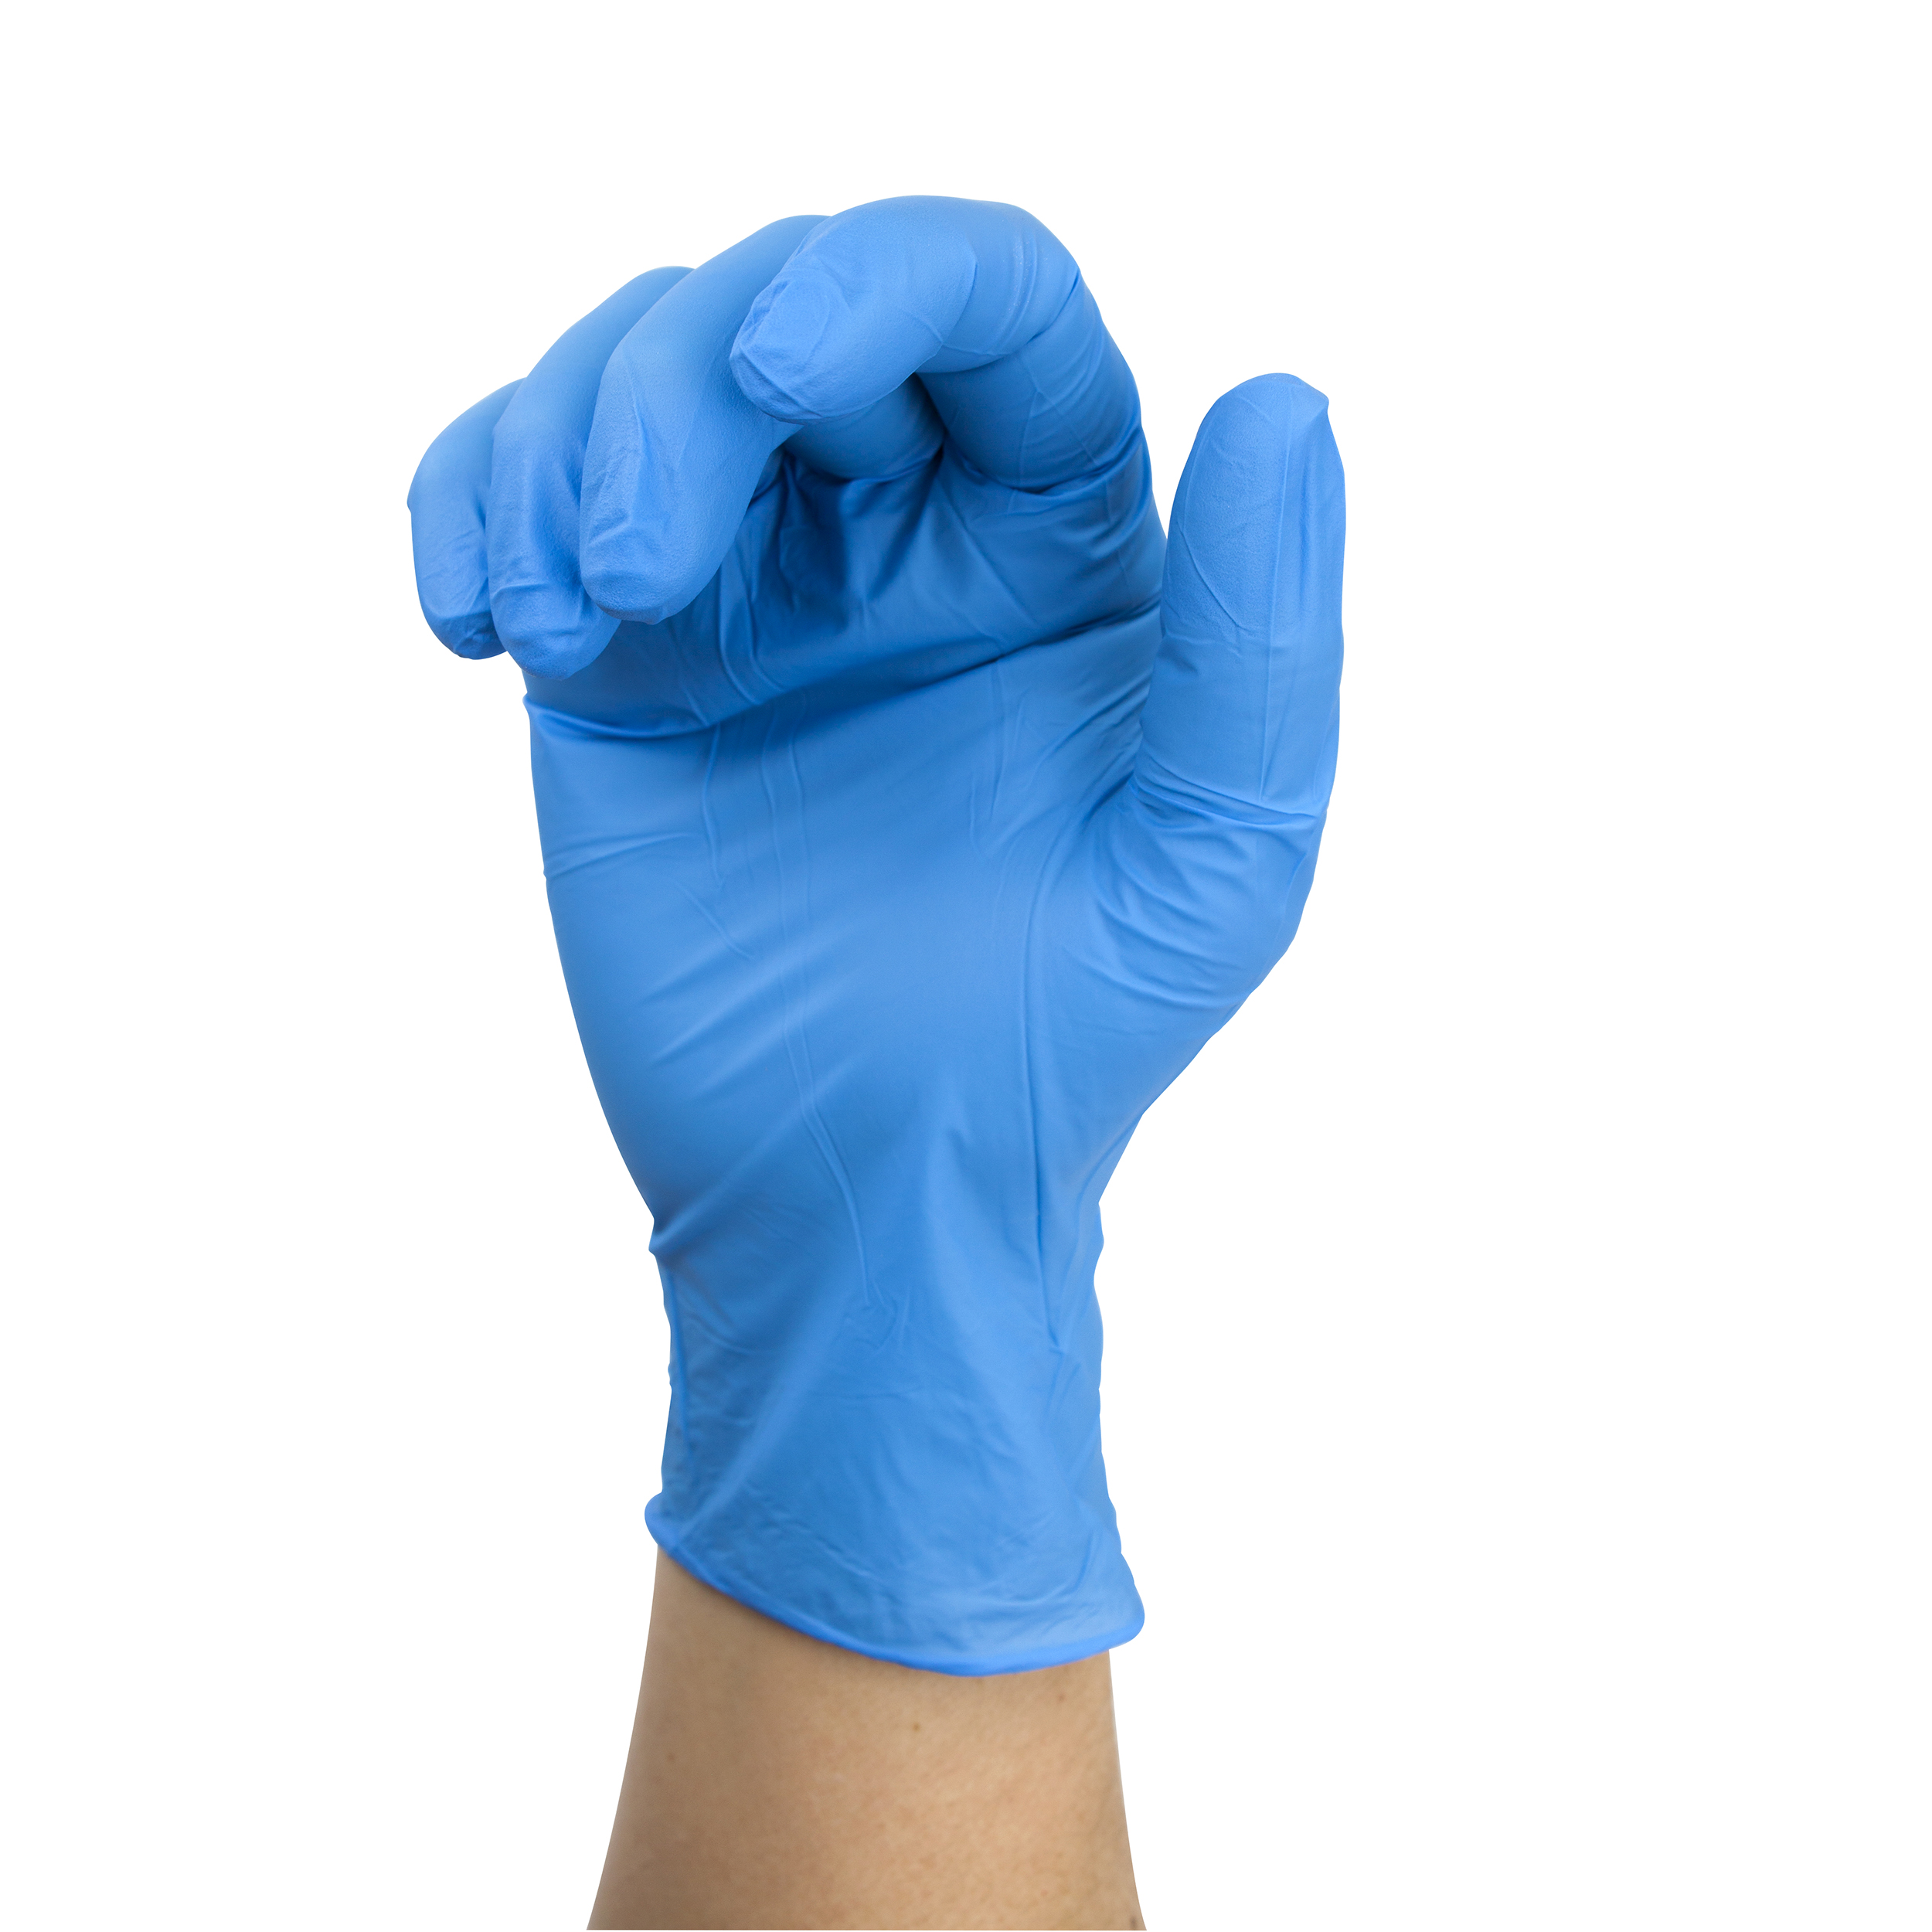 Nitrile Exam Glove (Non-latex) Powder Free - M - Blue - Box of 100